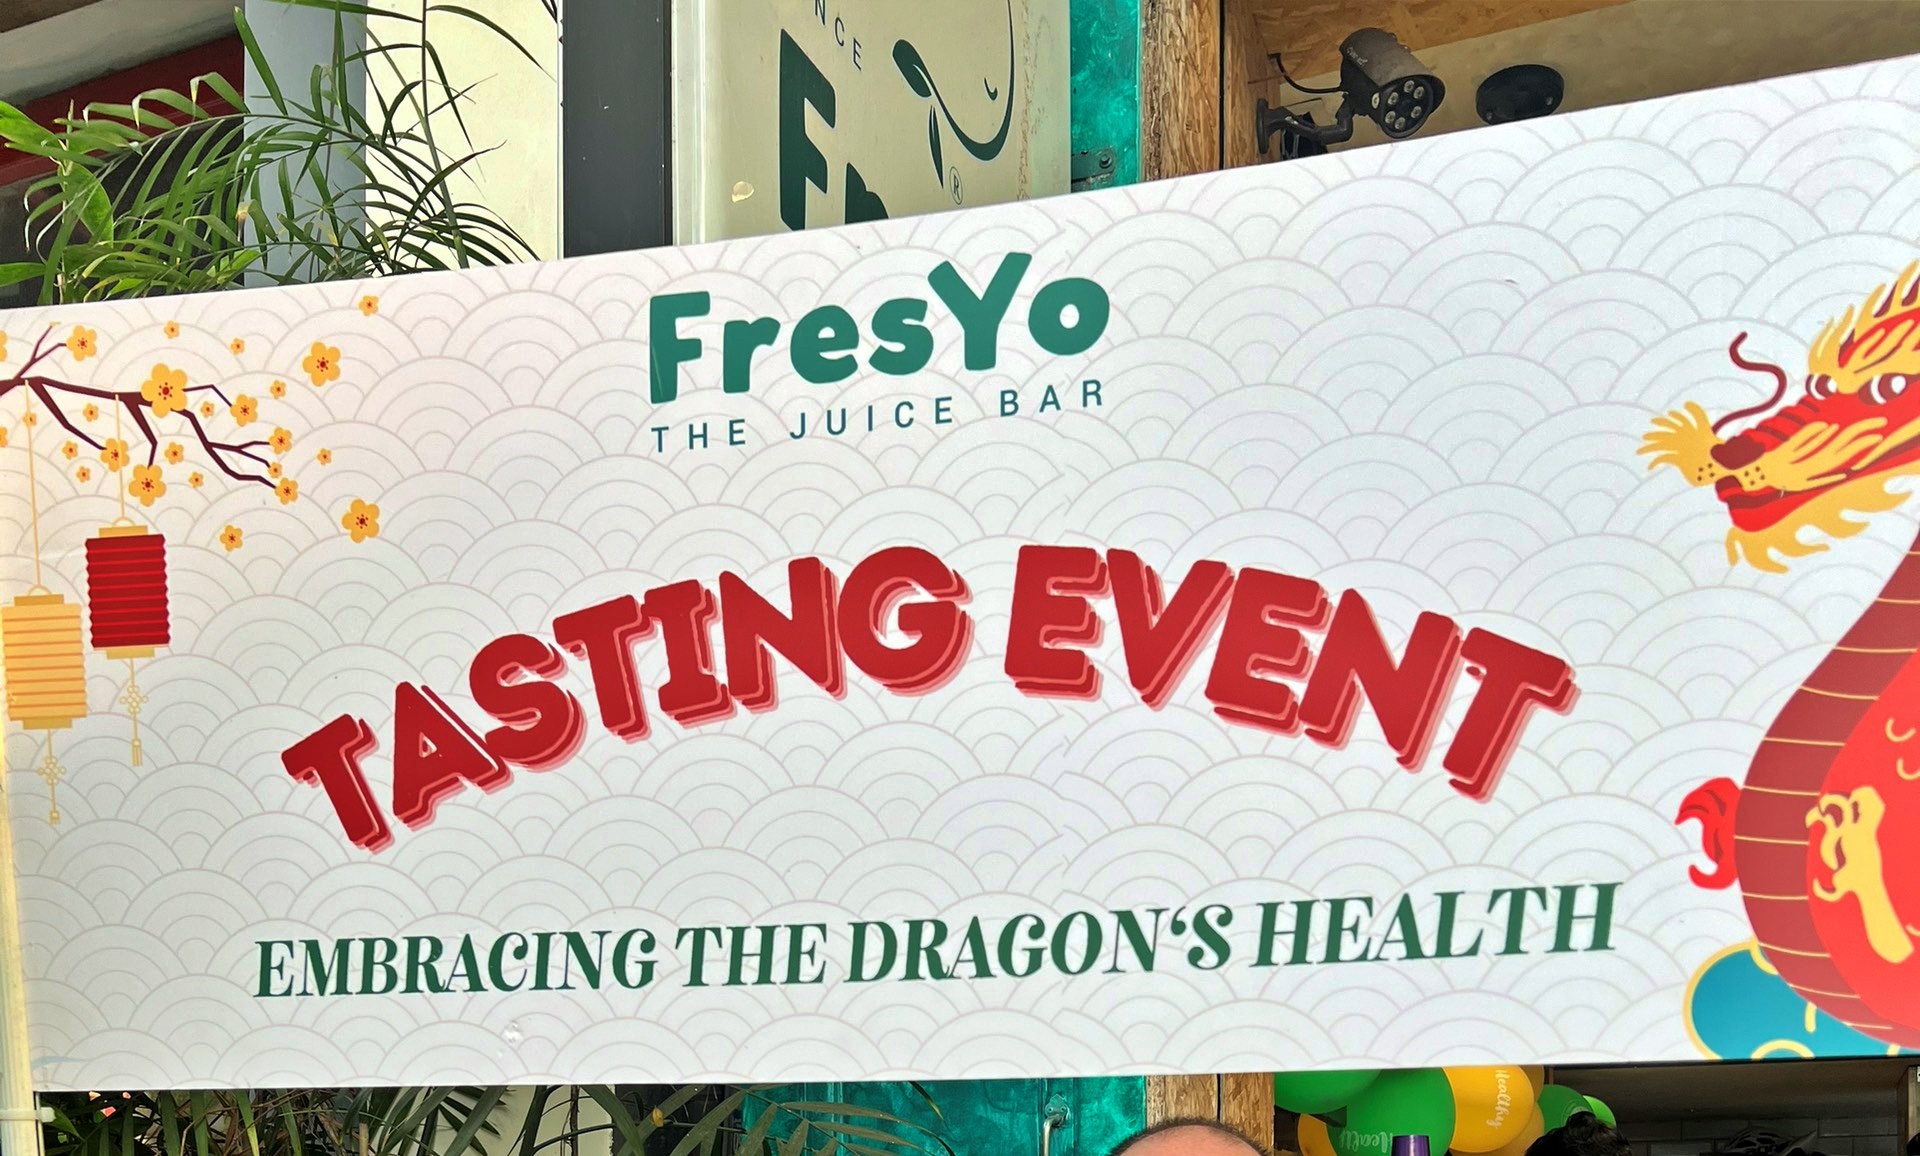 “EMBRACING THE DRAGON‘S HEALTH” - FRESYO TASTING EVENT ????